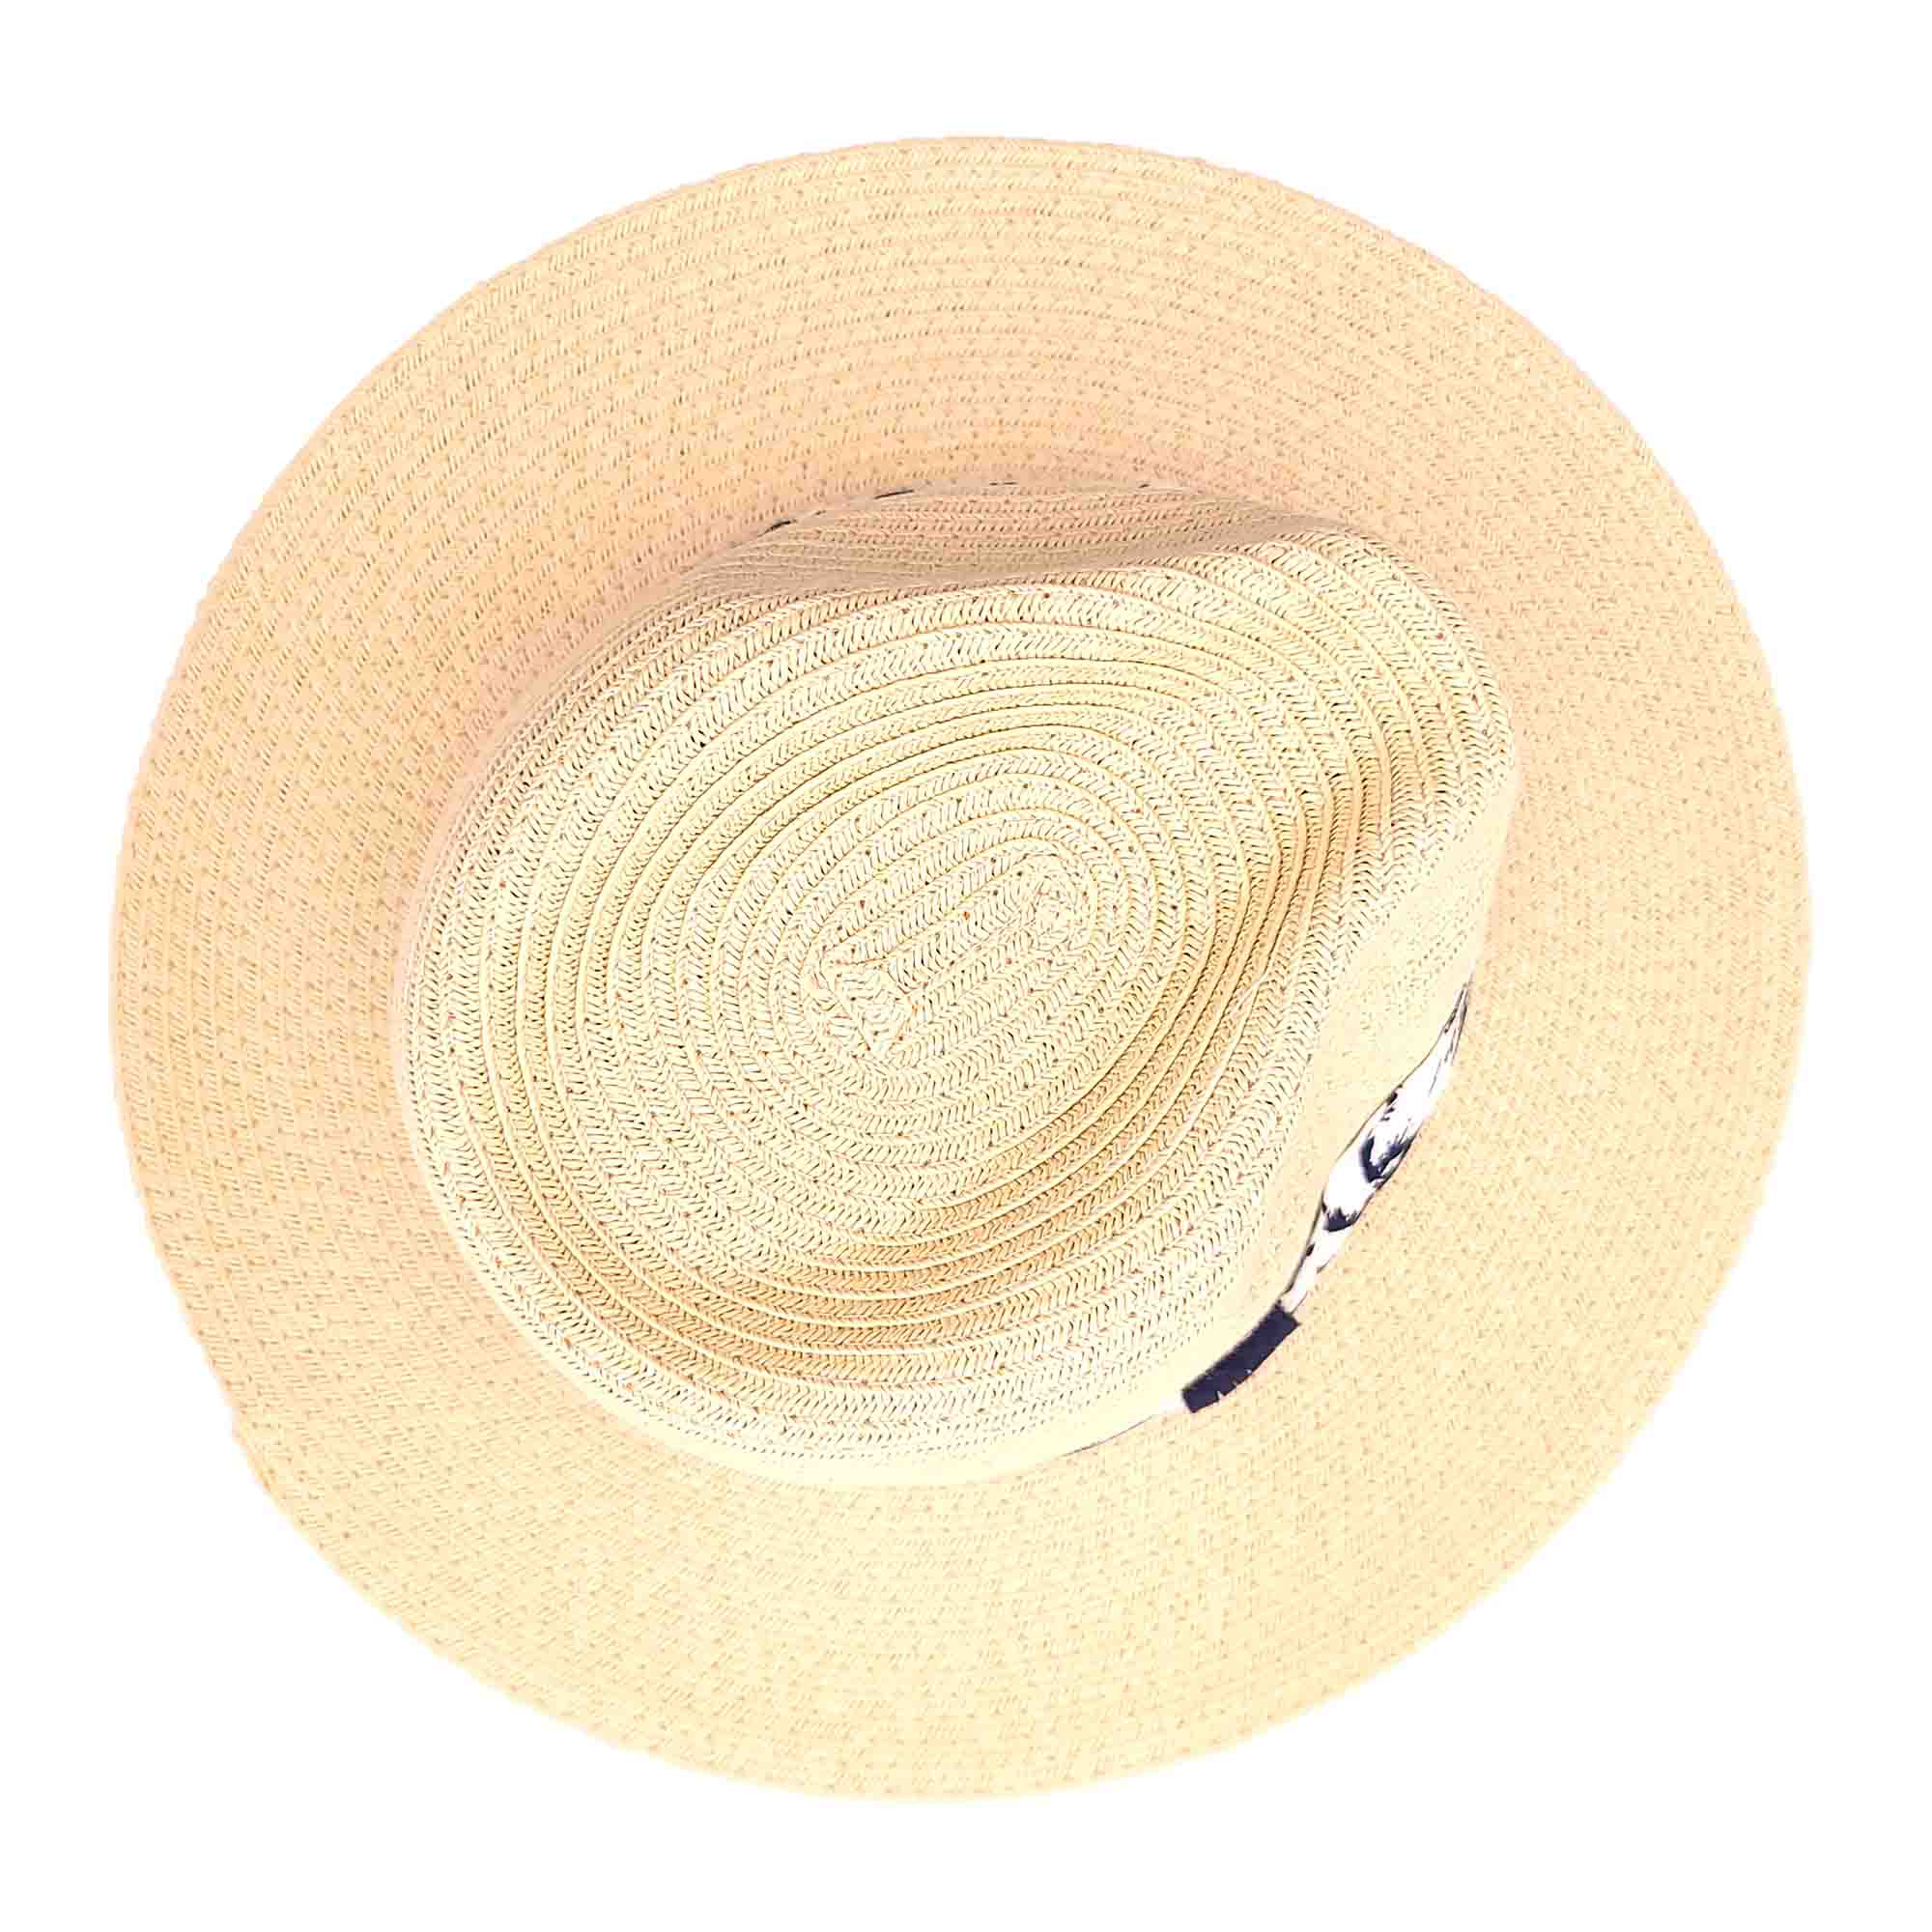 Small Size Fedora Hat with Palm Print Cotton Band - Sunny Dayz™ Safari Hat Sun N Sand Hats    